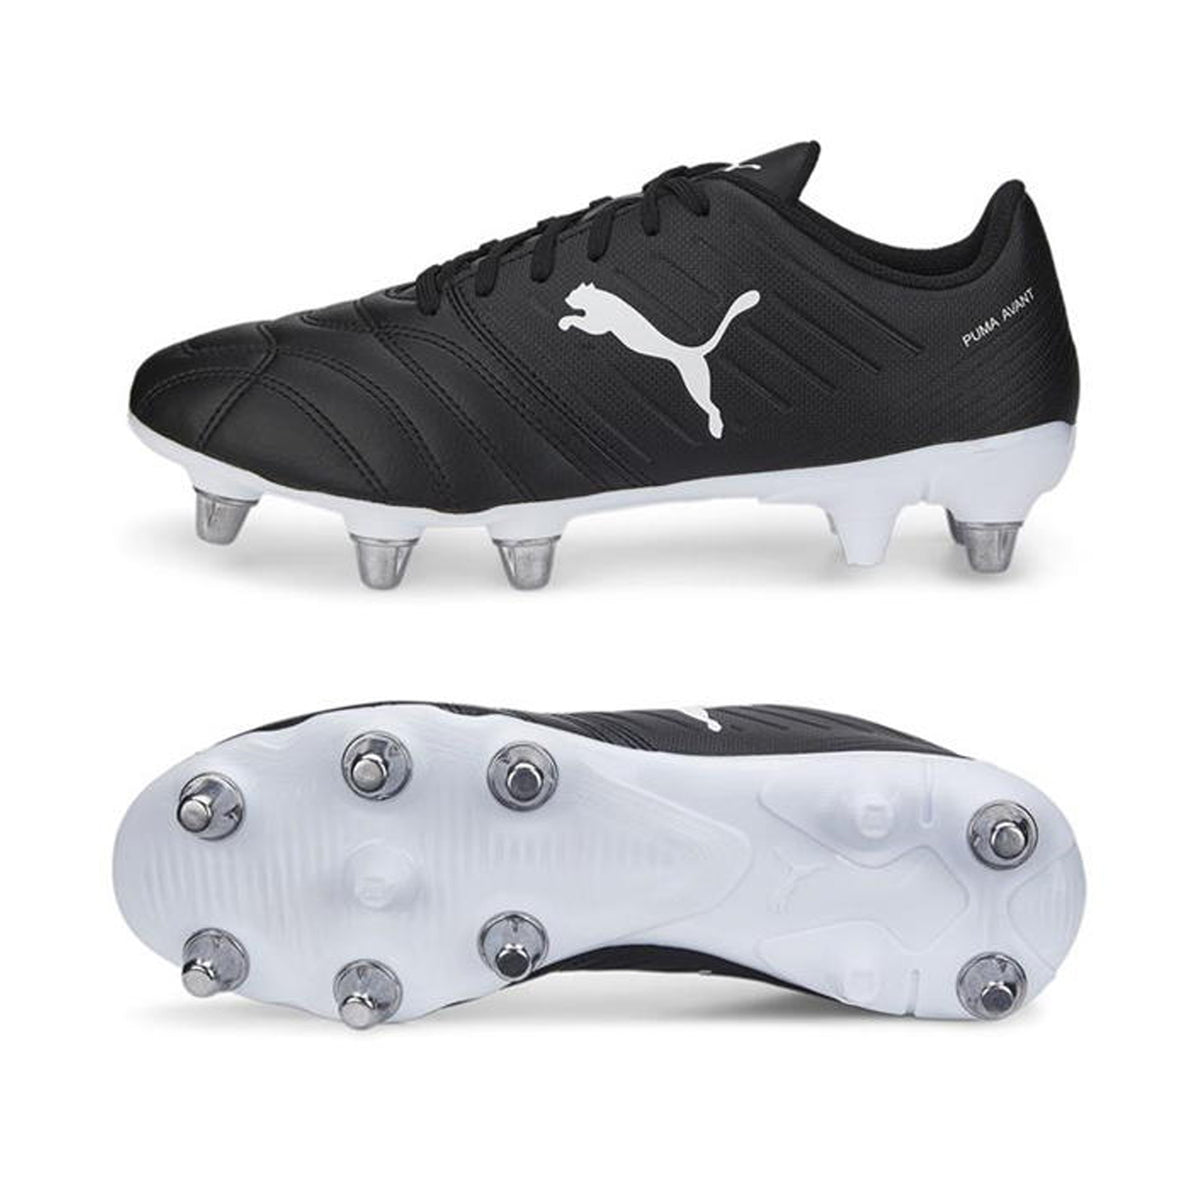 Puma Avant Rugby Boots: Black/White